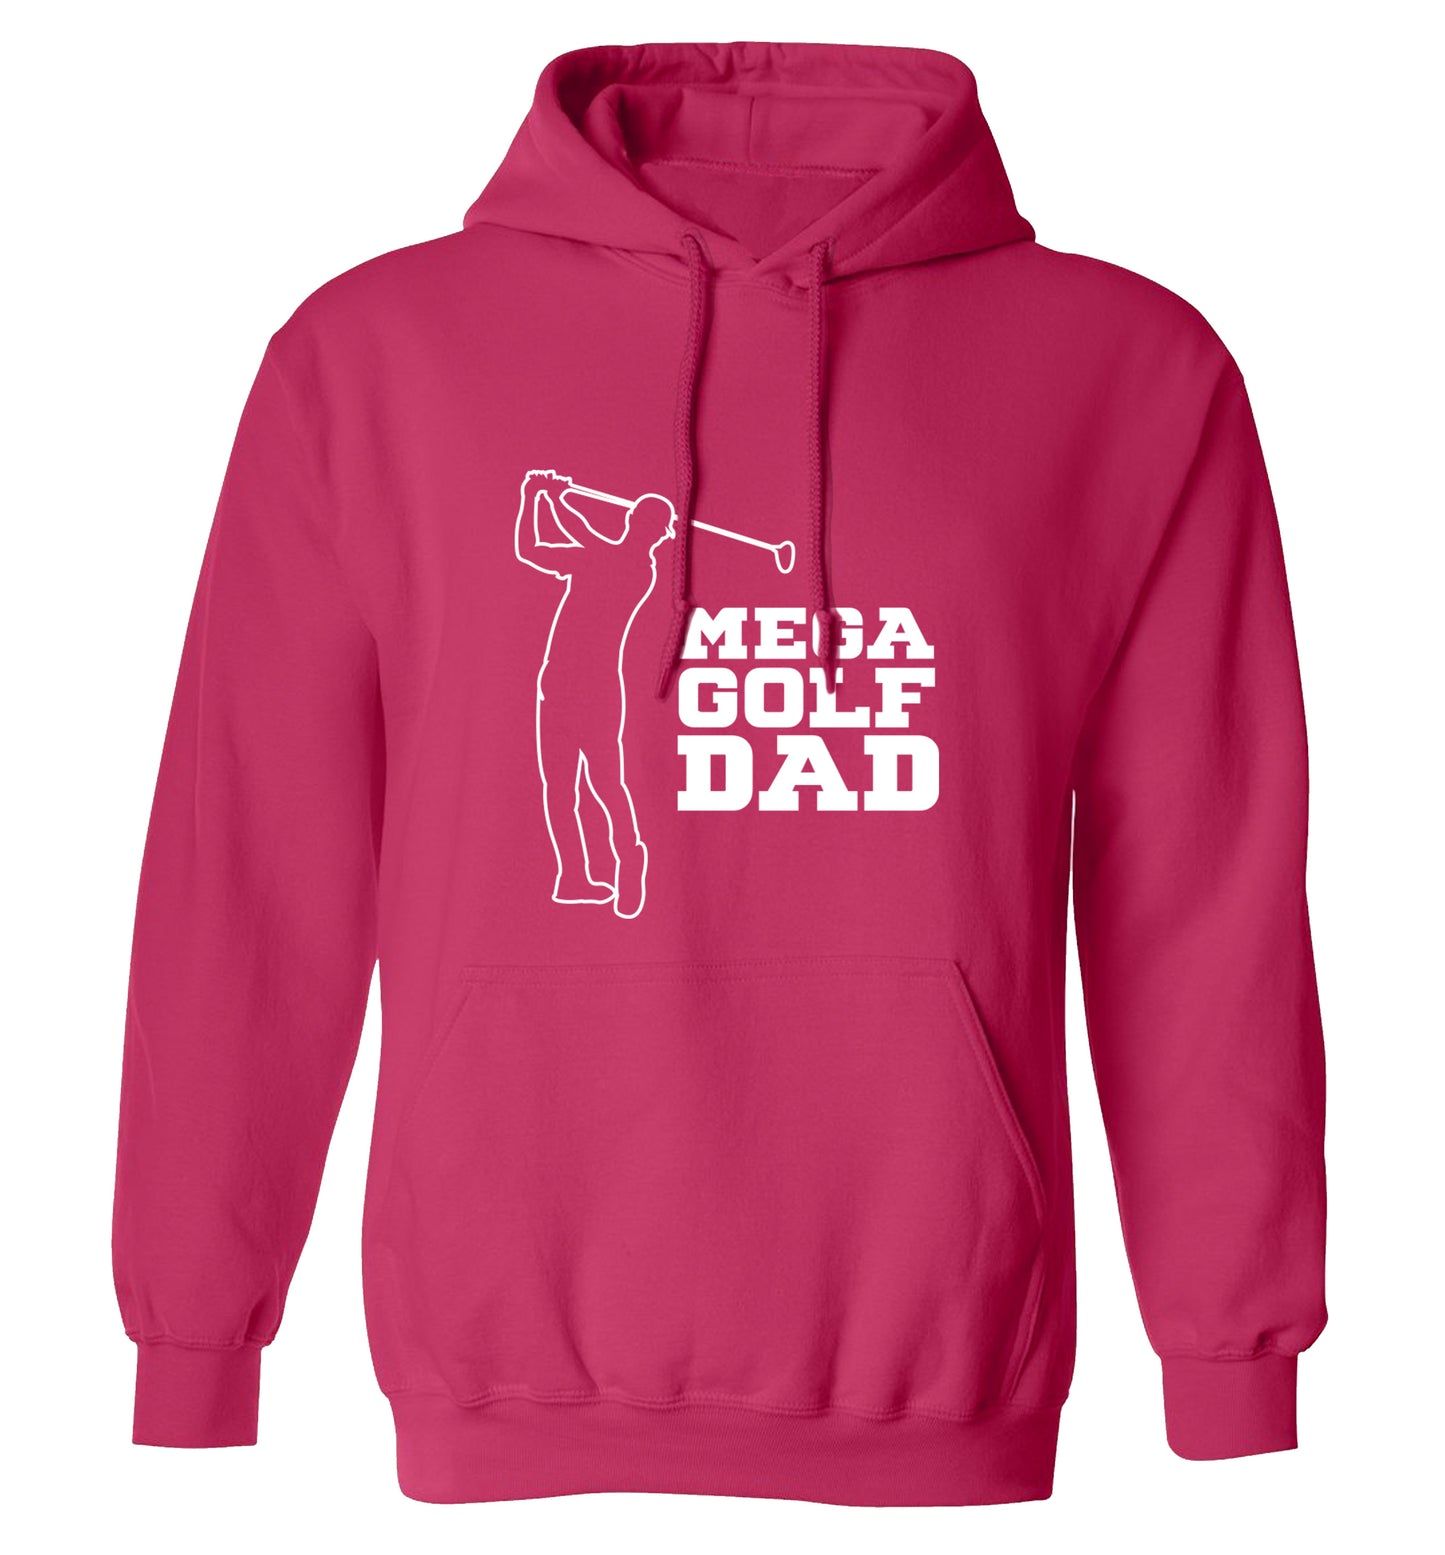 Mega golfing dad adults unisex pink hoodie 2XL